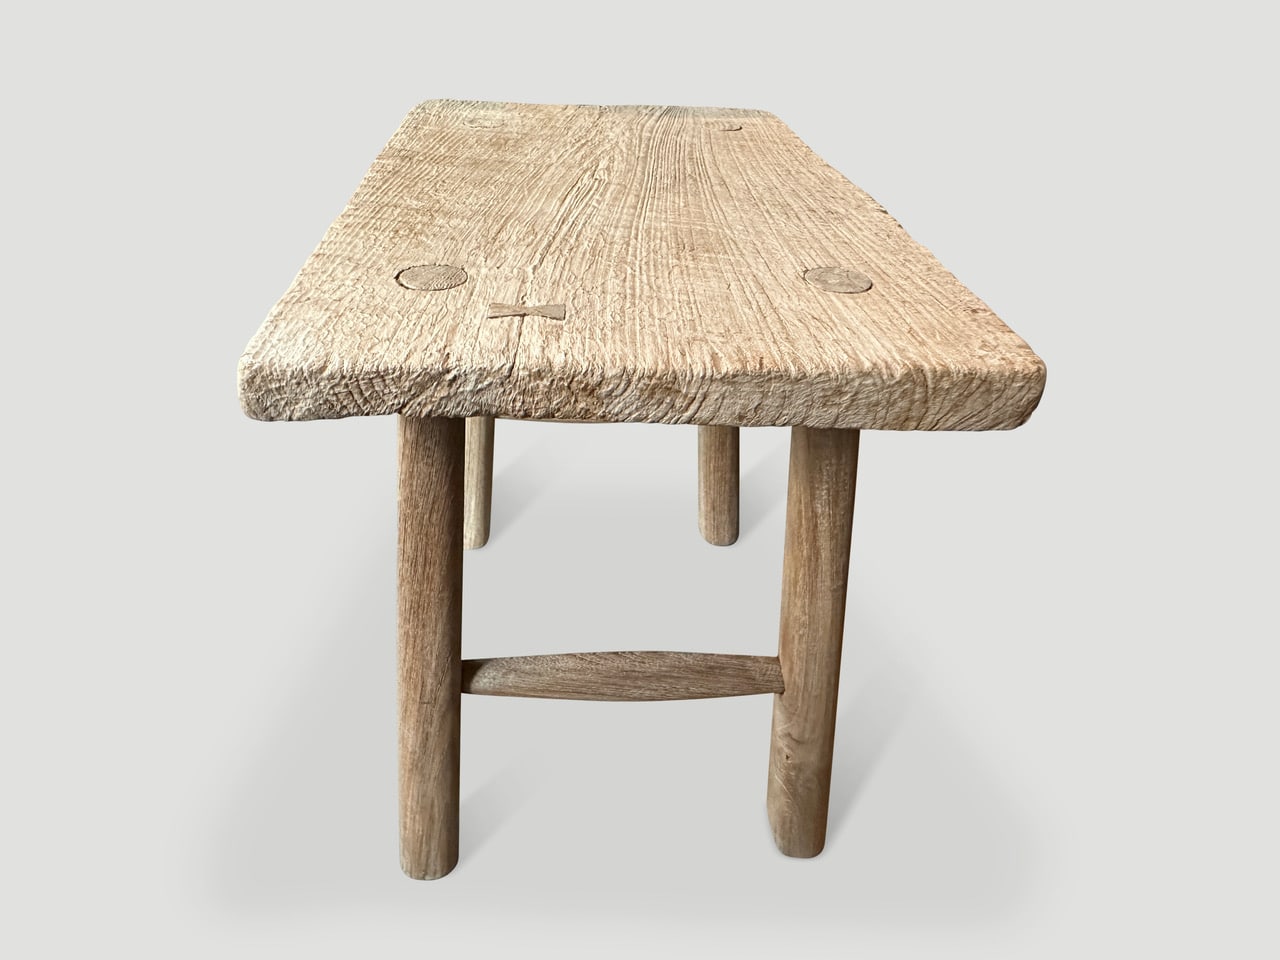 bleached teak wood stool or side table